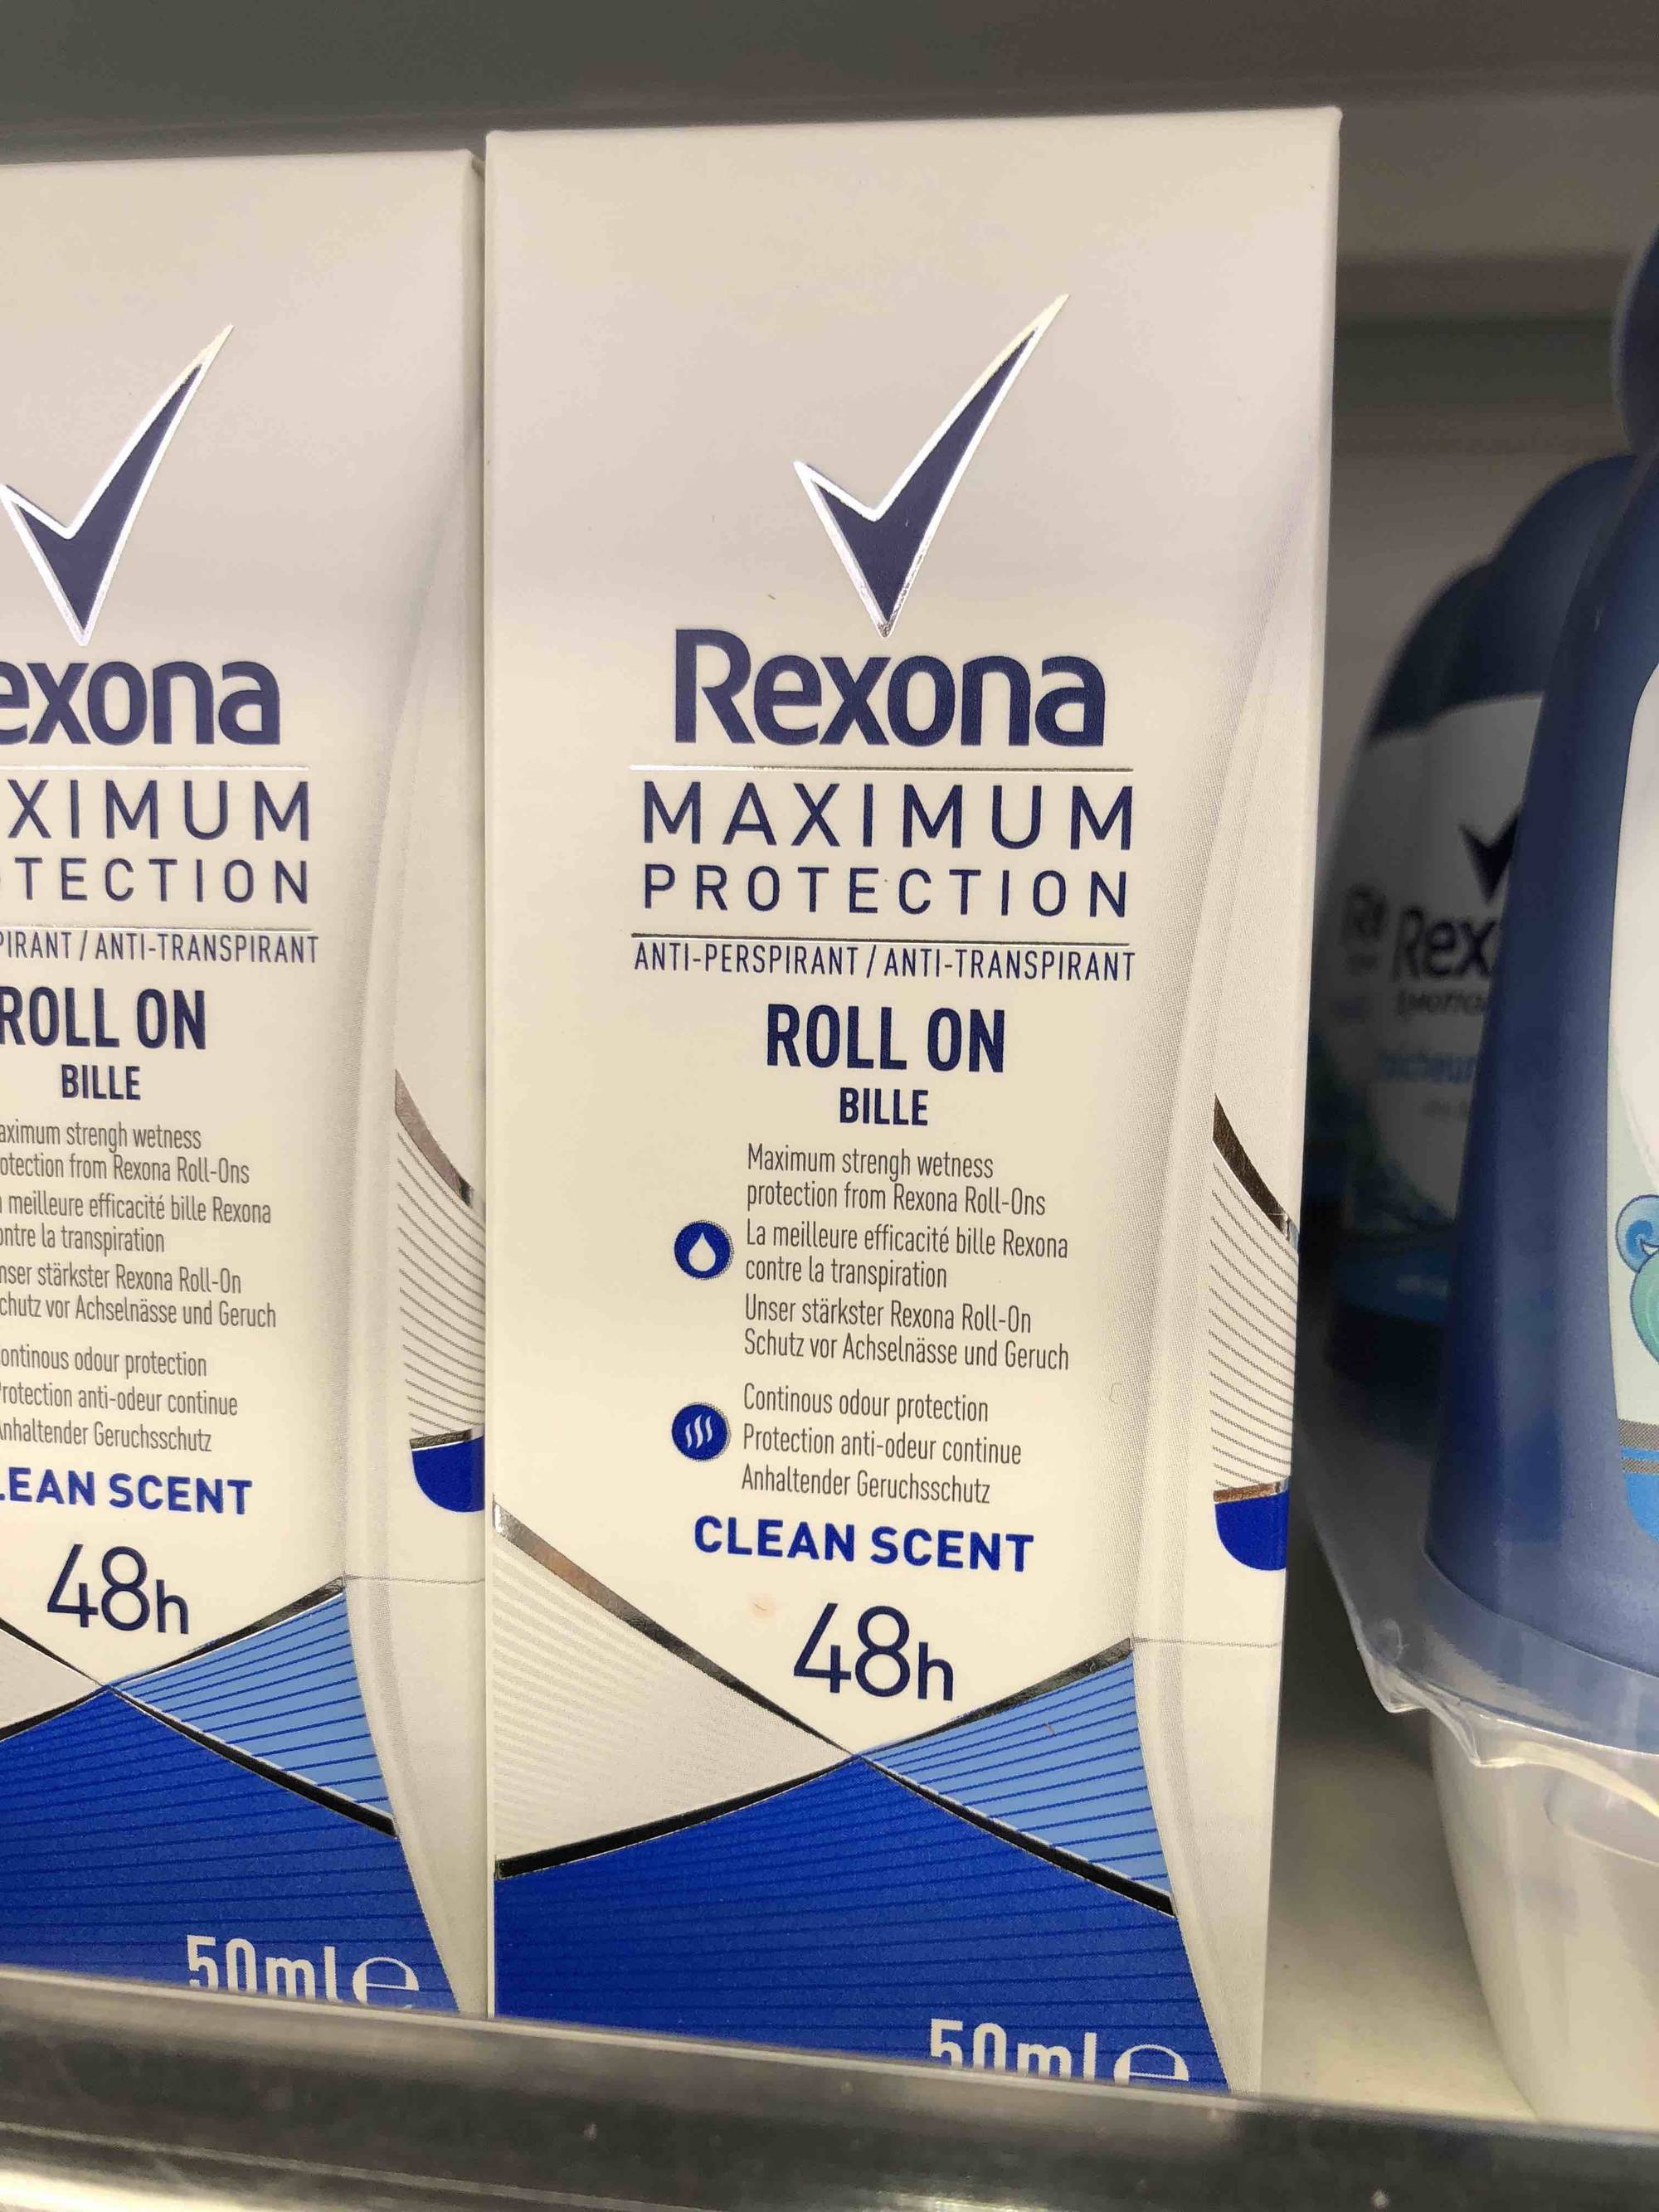 REXONA - Maximum protection - Anti-perspirant / Anti-transpirant 48h